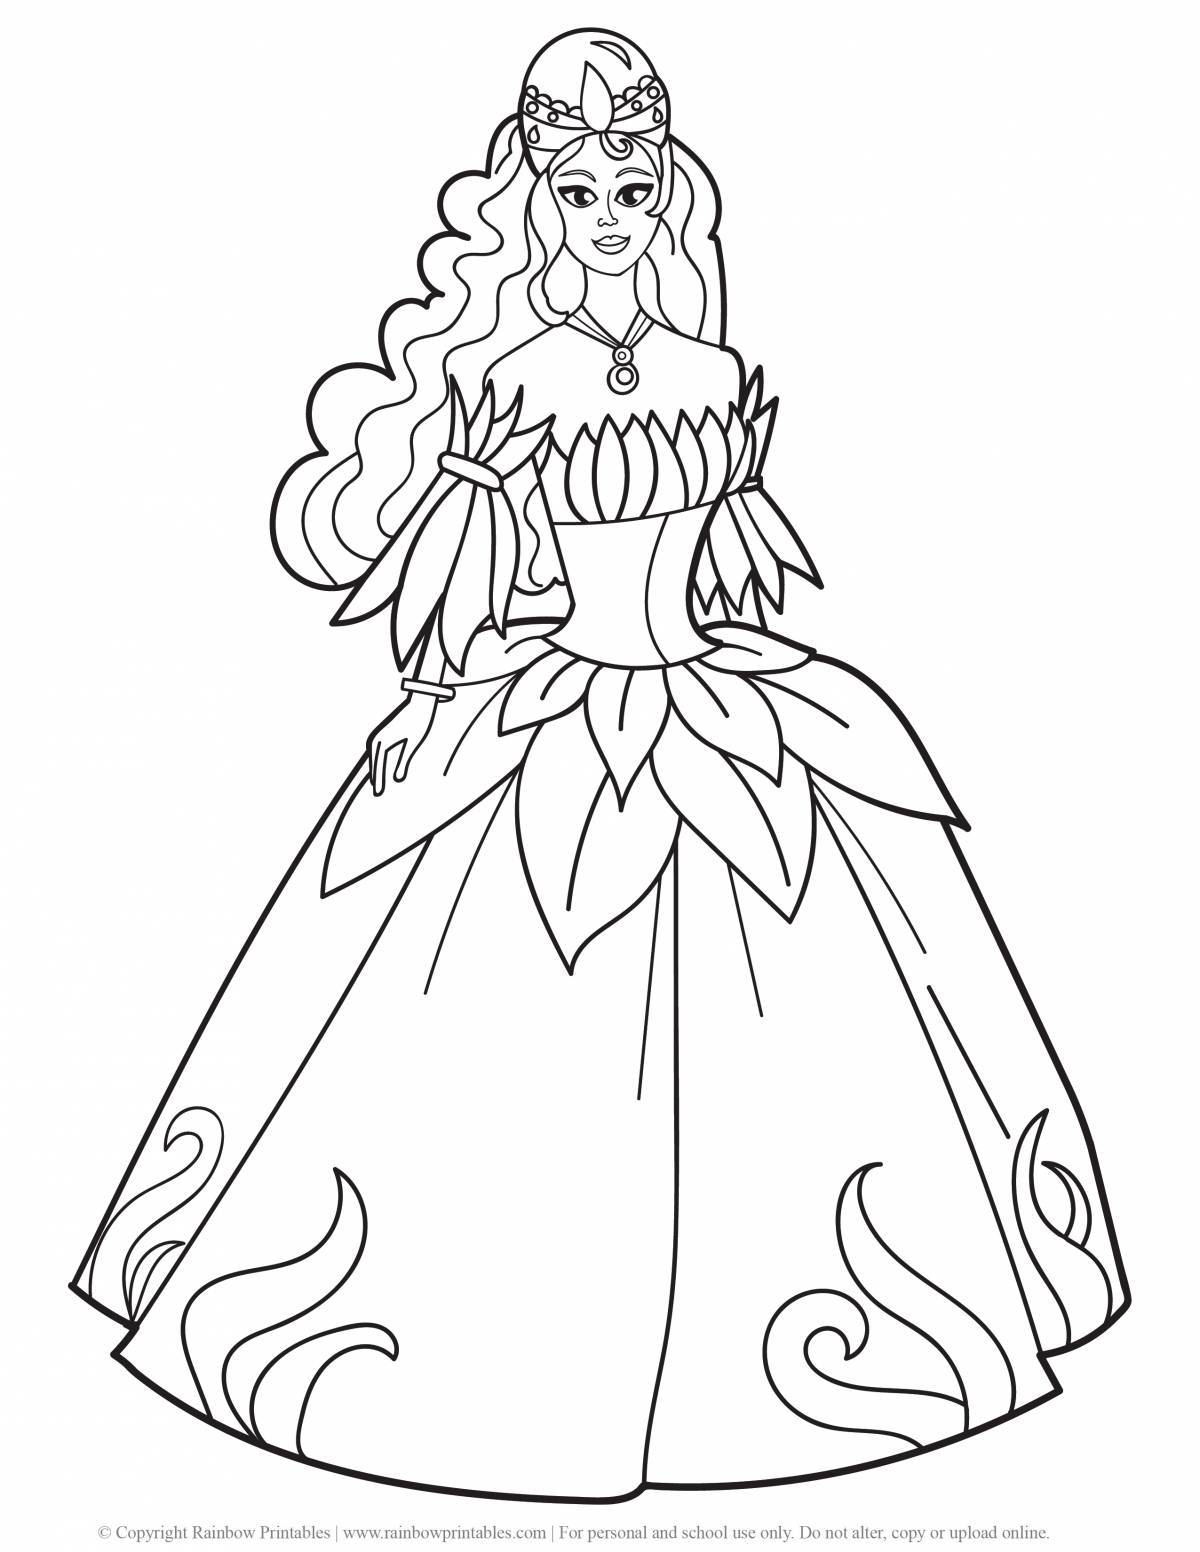 Exquisite princess coloring in beautiful dresses